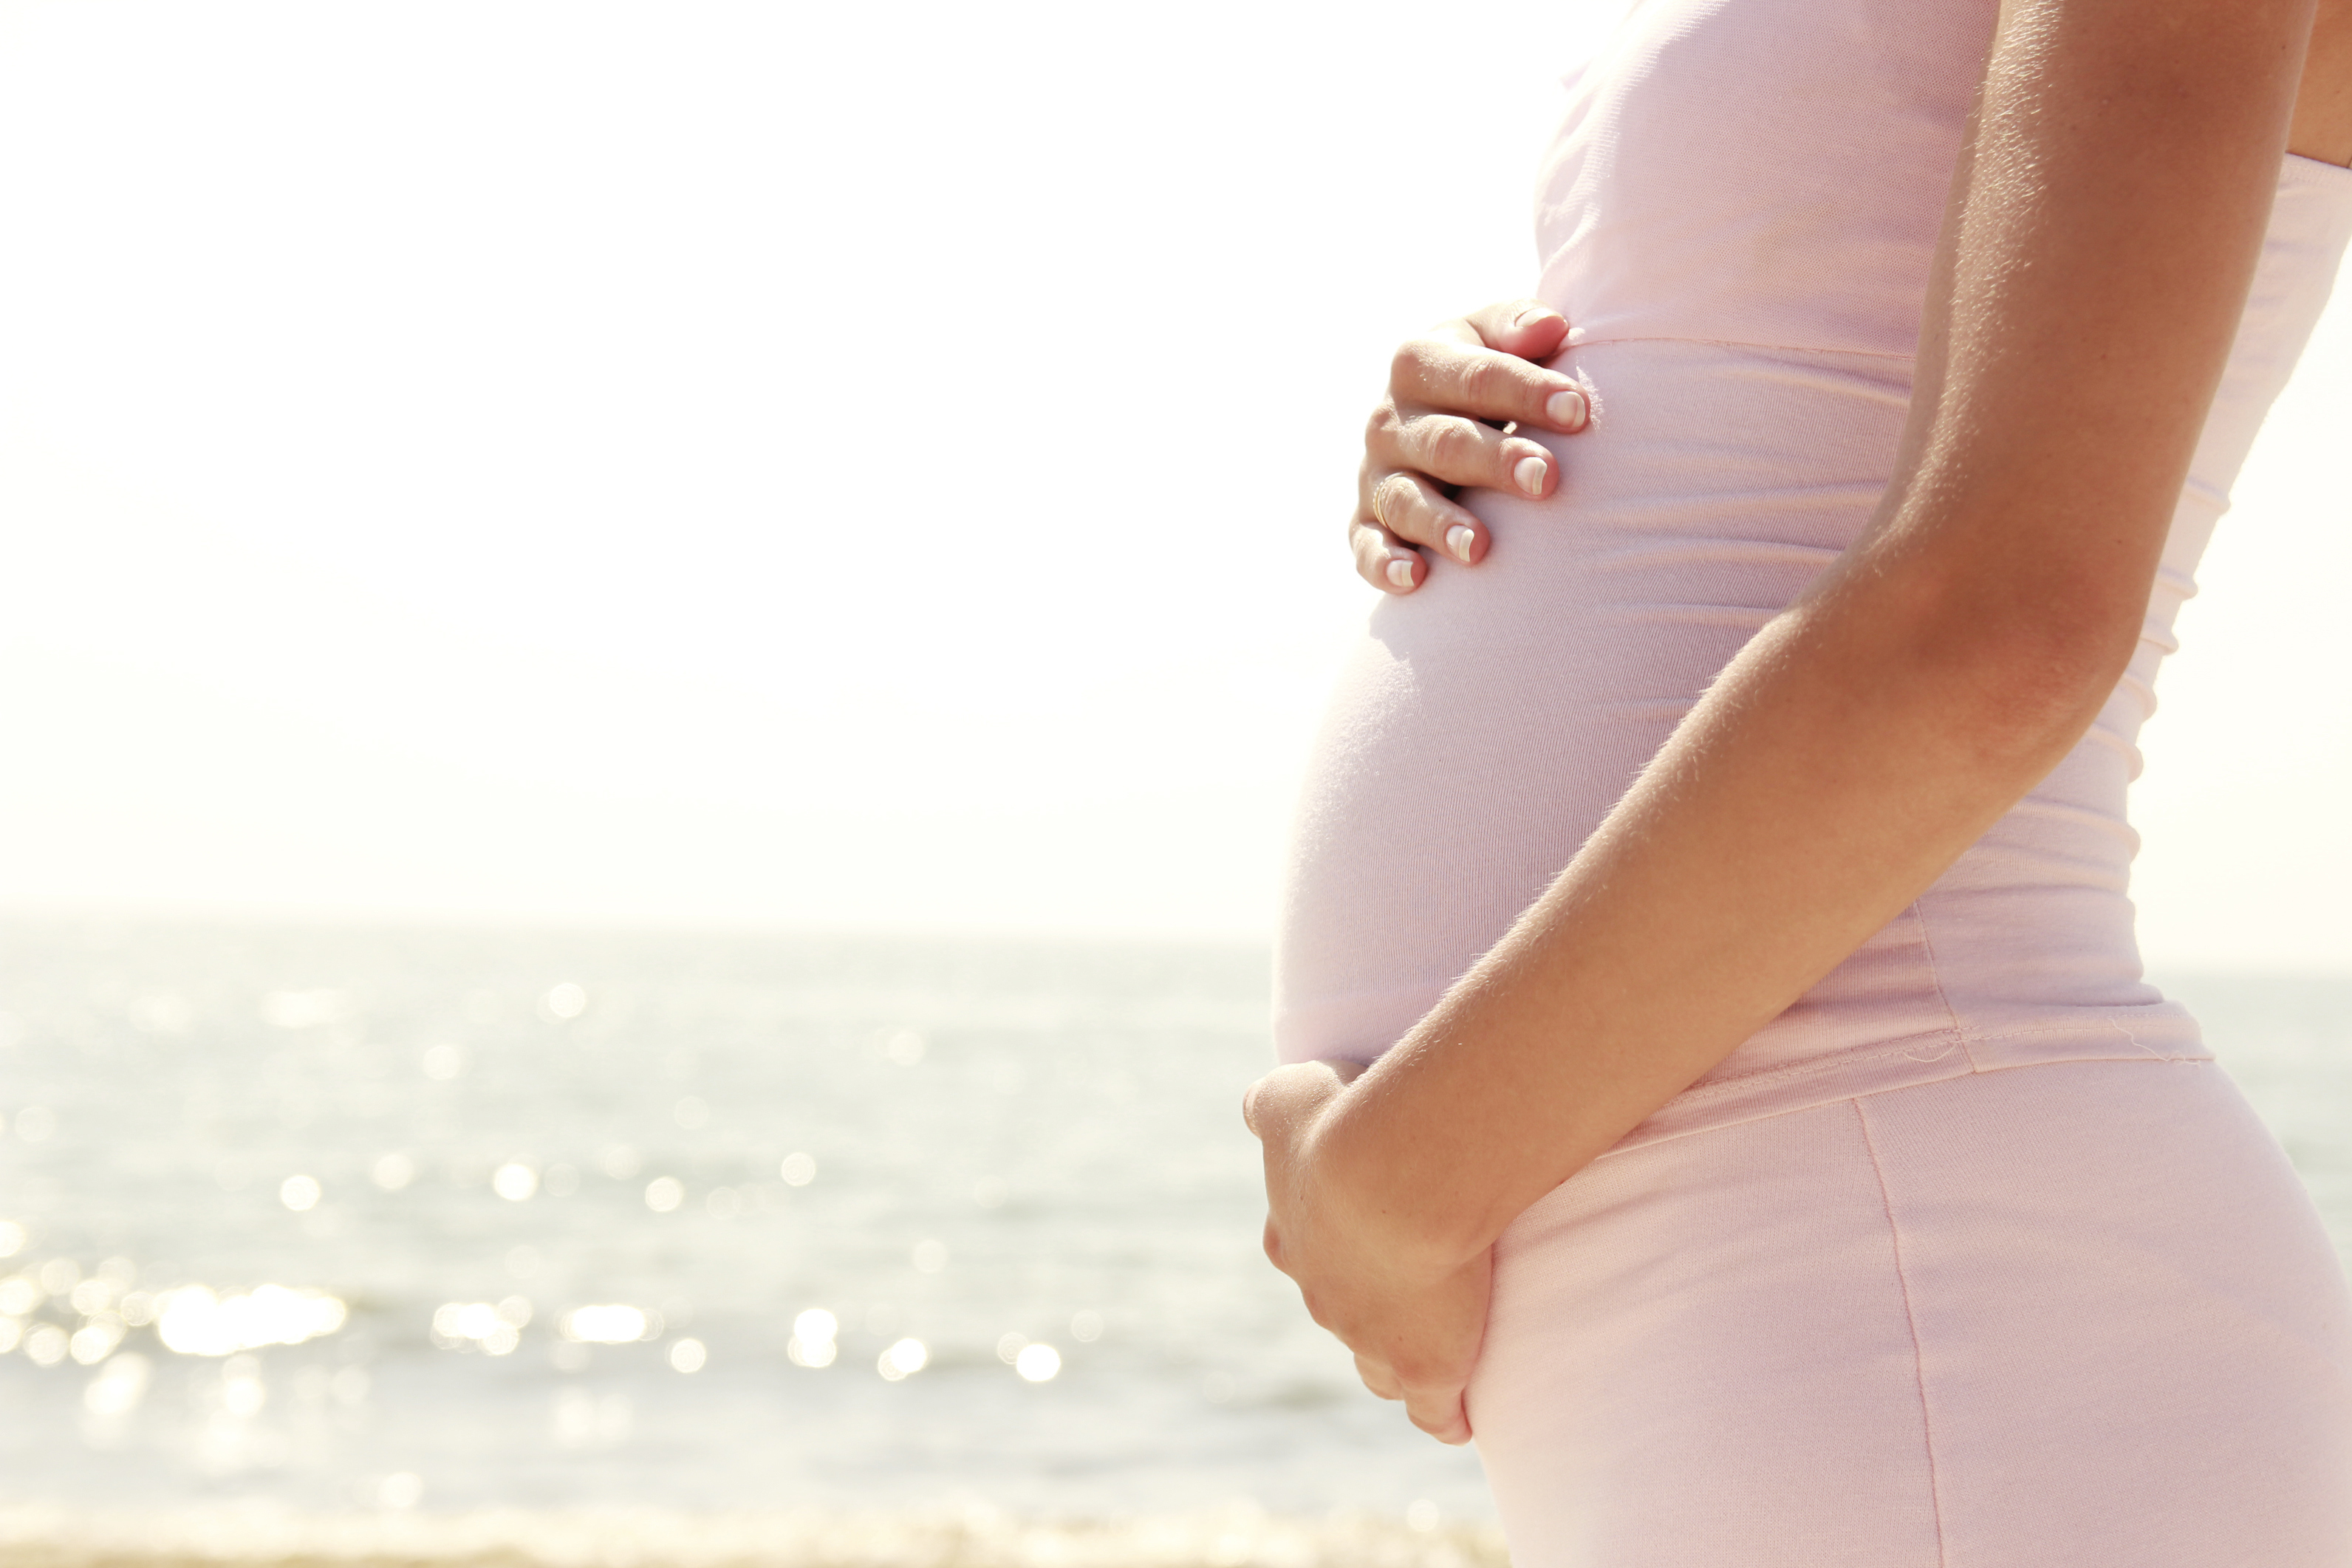 Doctors Should Urge Against Pot Use During Pregnancy: Guidelines